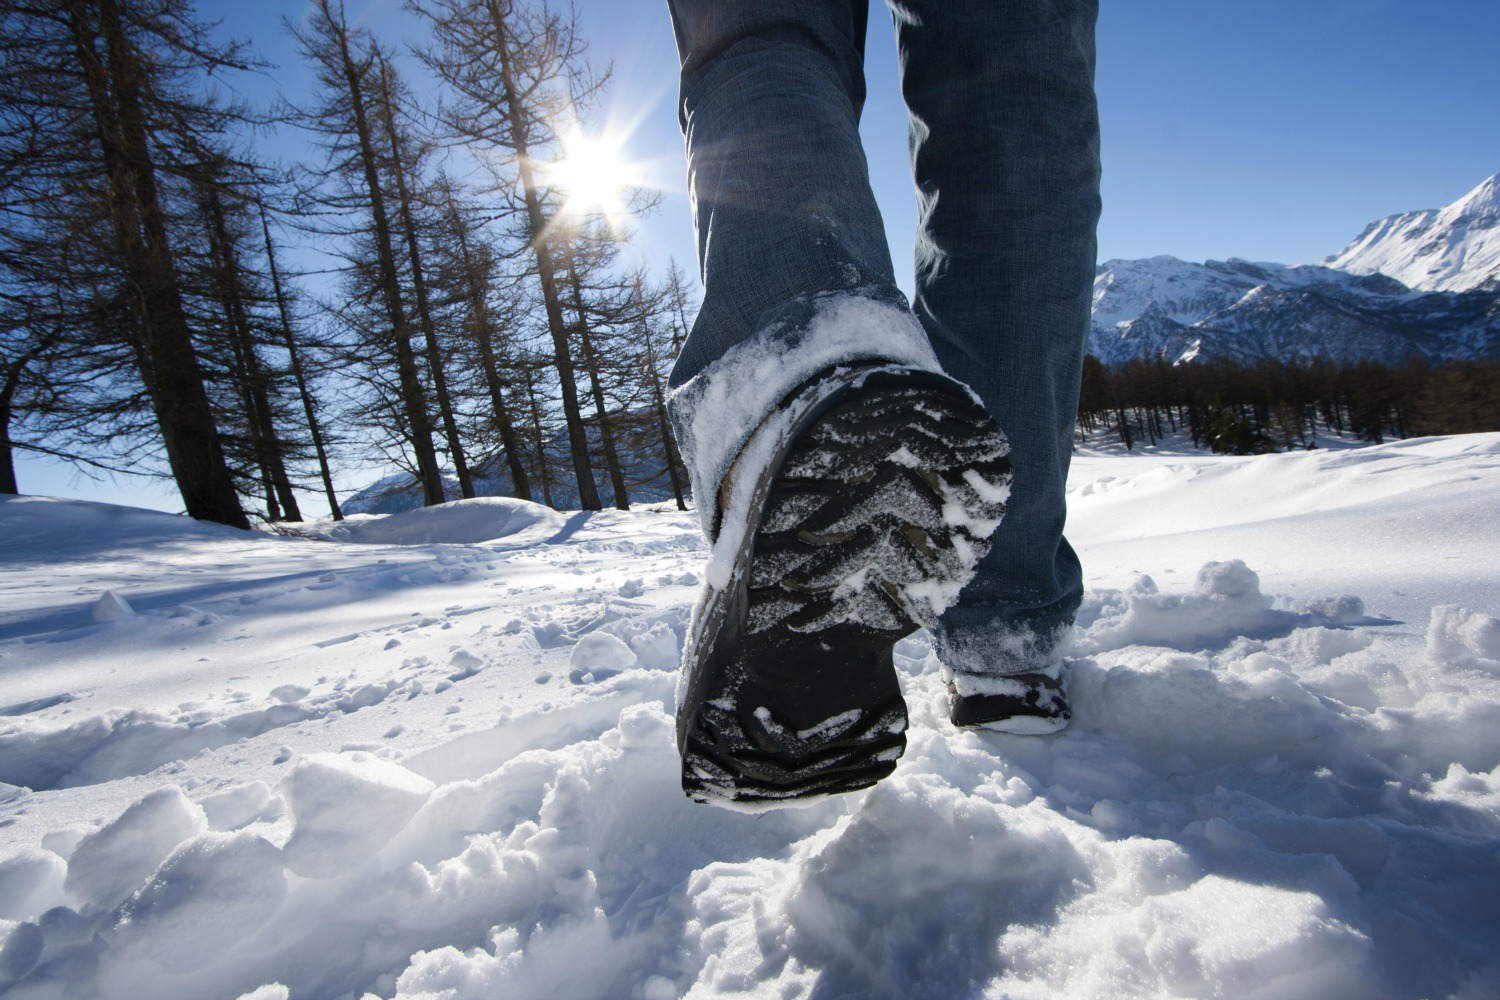 Footwear Tips for Winter